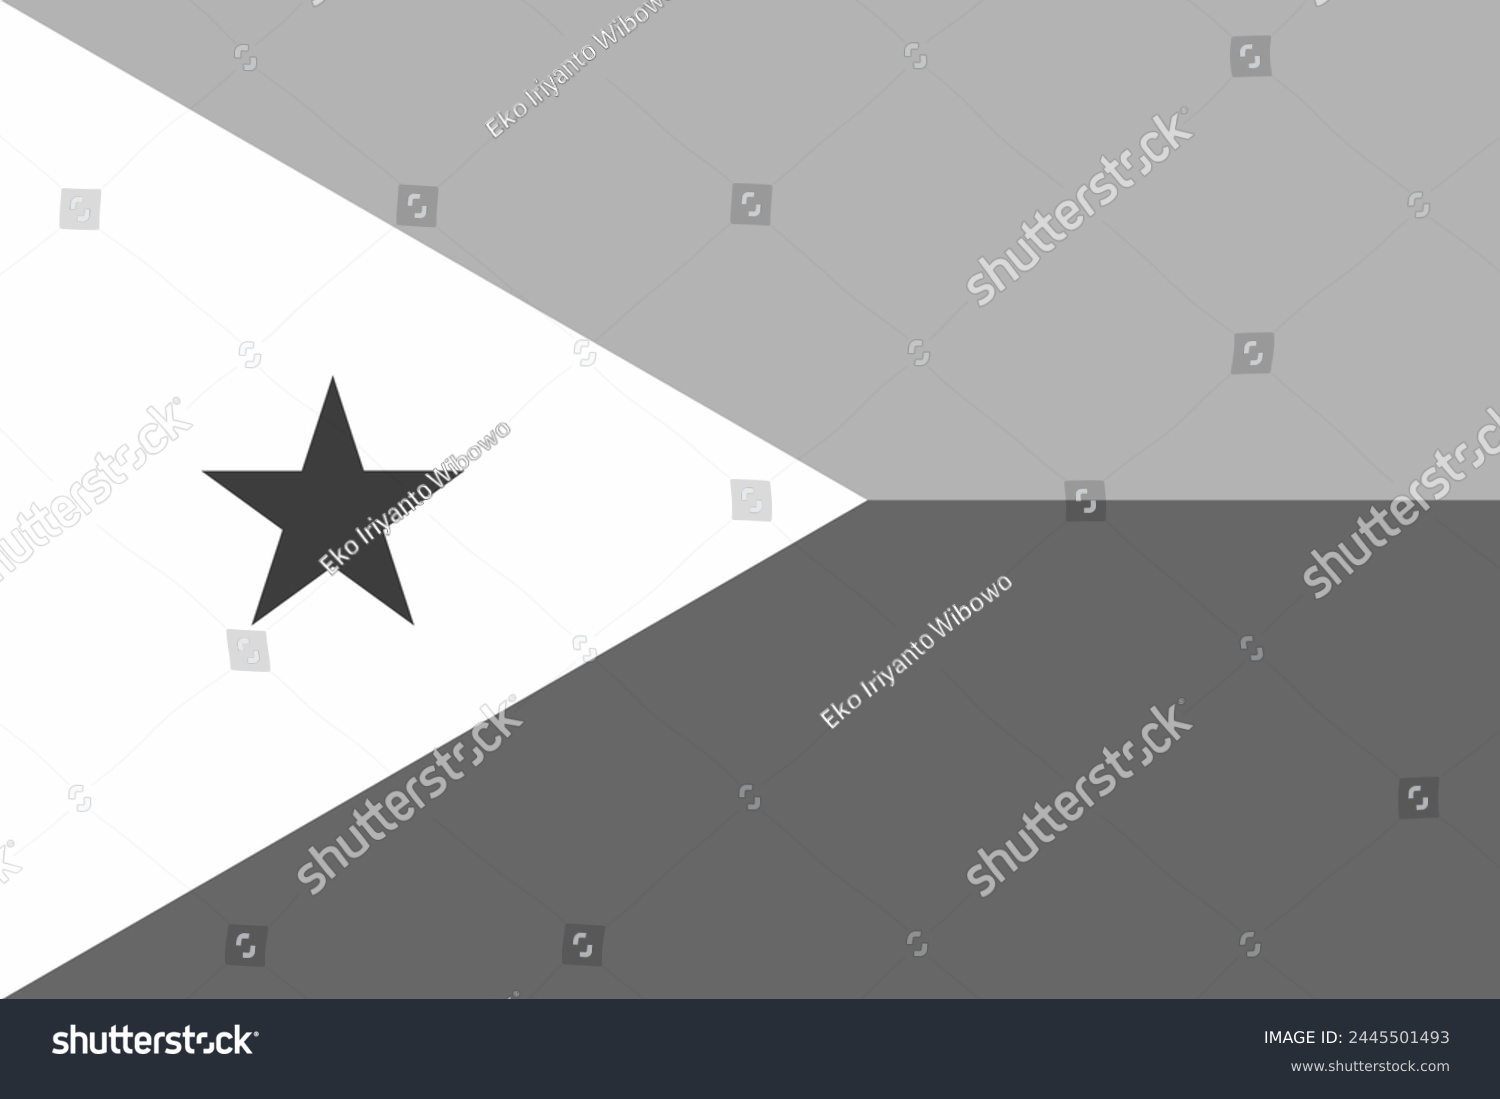 SVG of Djibouti flag original black and white svg